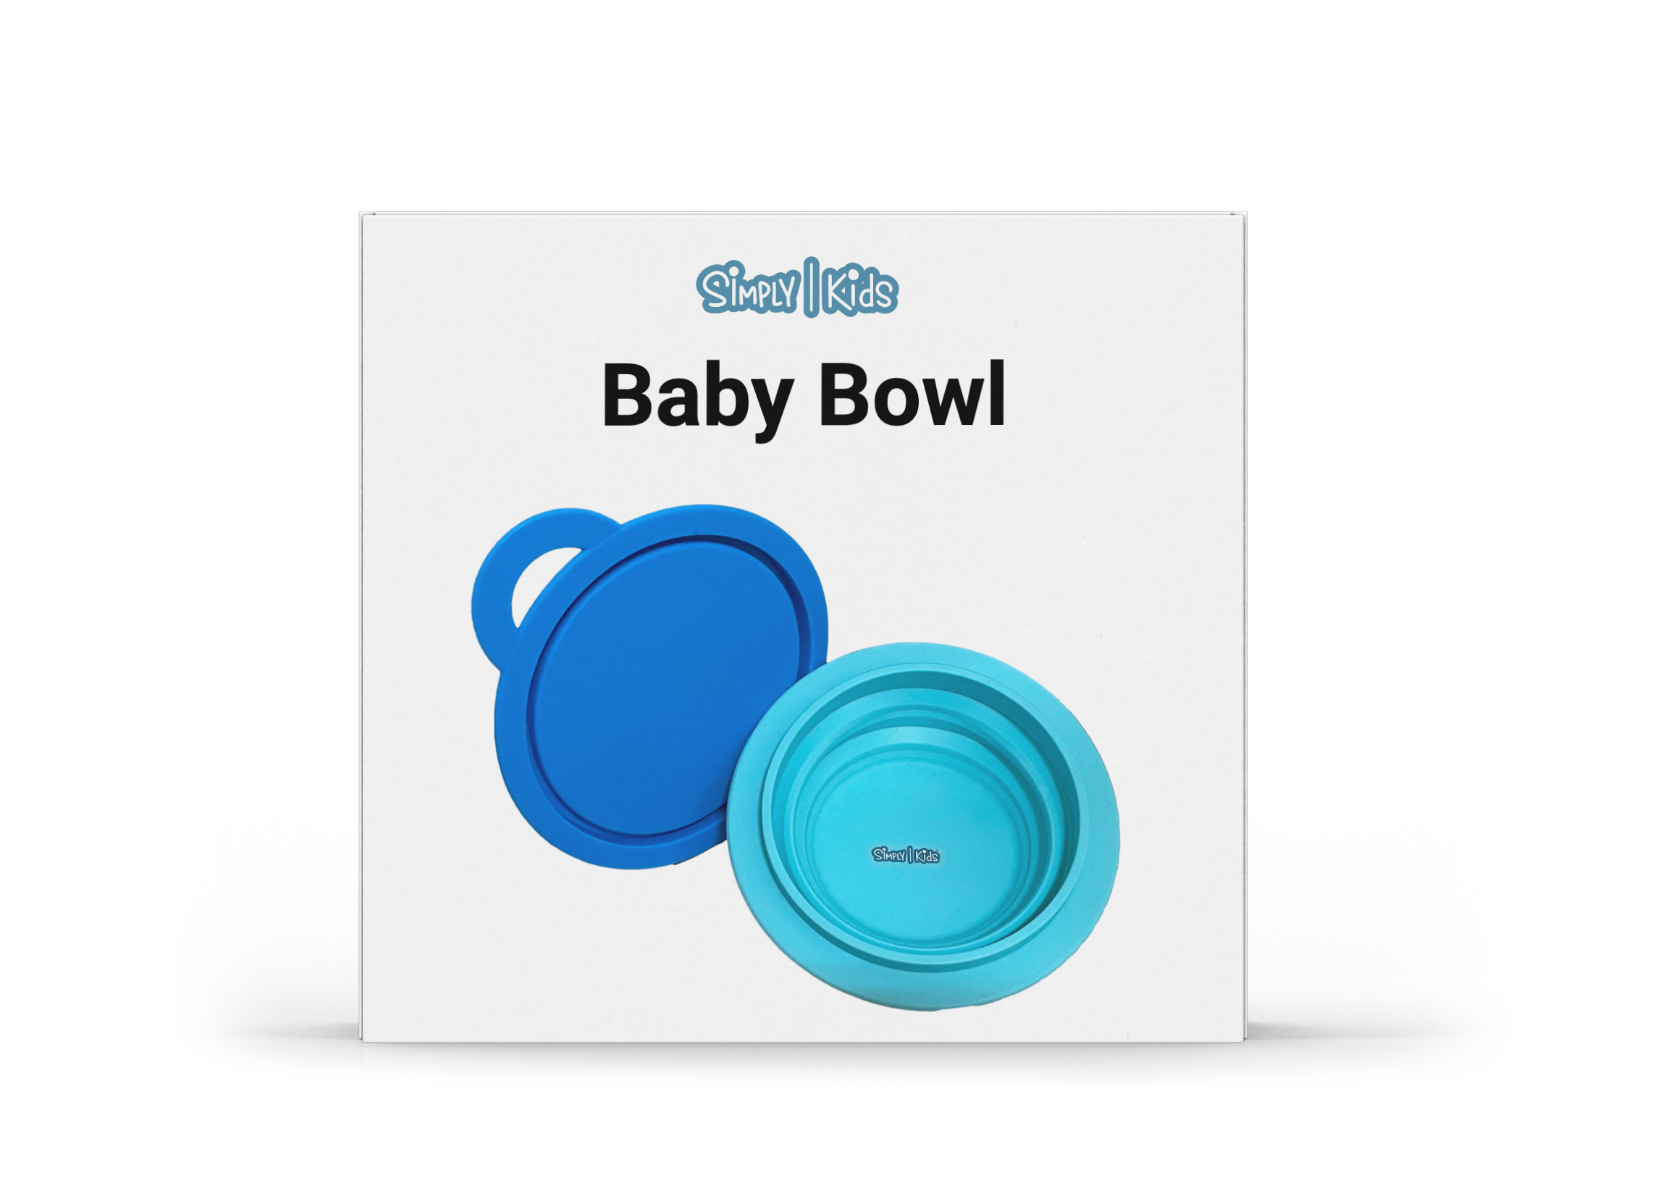 Simply Kids Baby Bowl